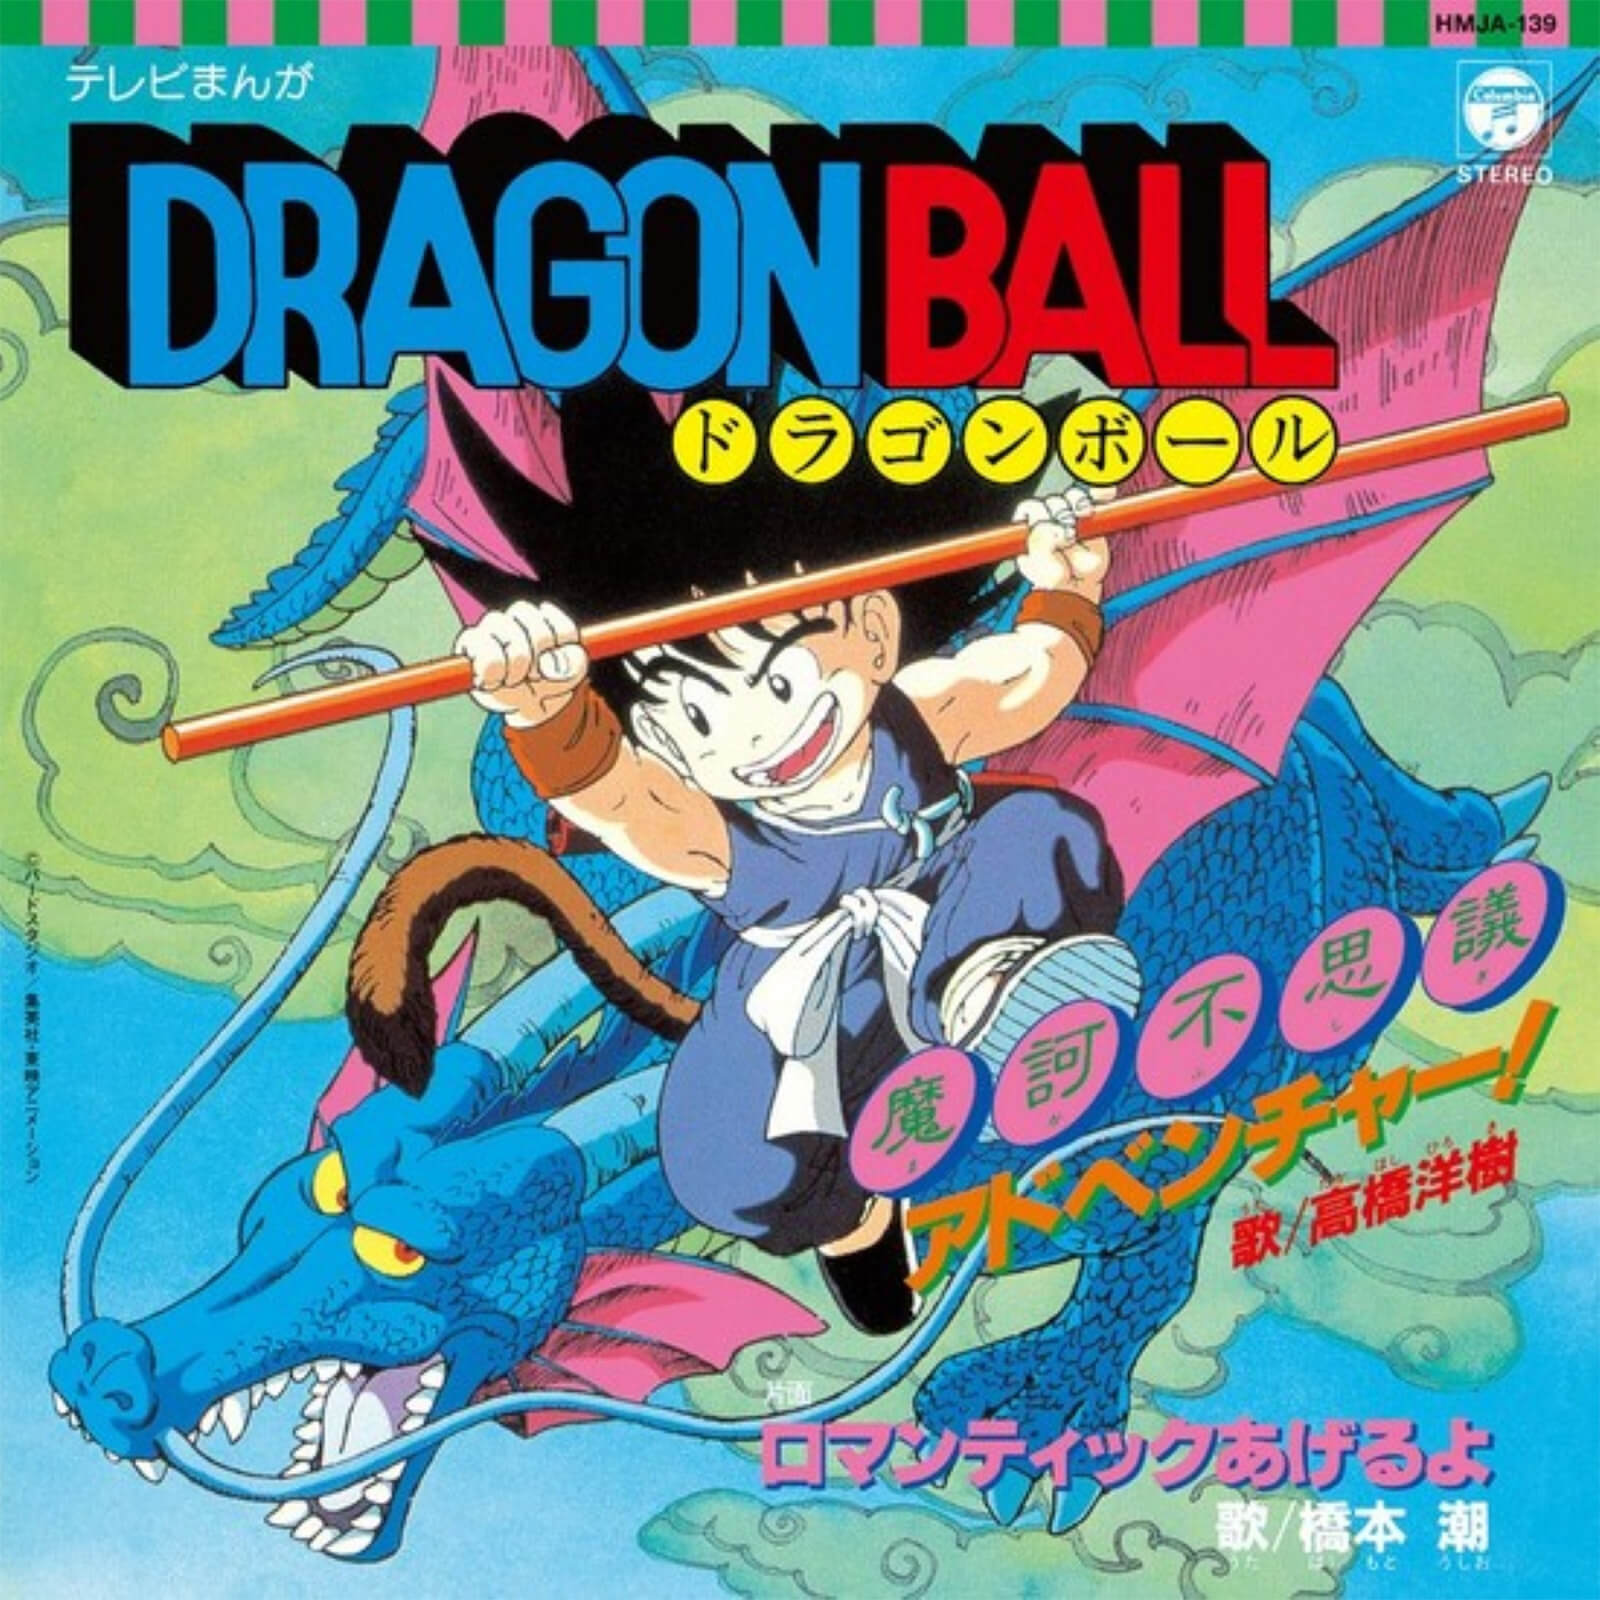 Dragon Ball - Makafushigi Adventure! b/w Romantic Ageruyo 7